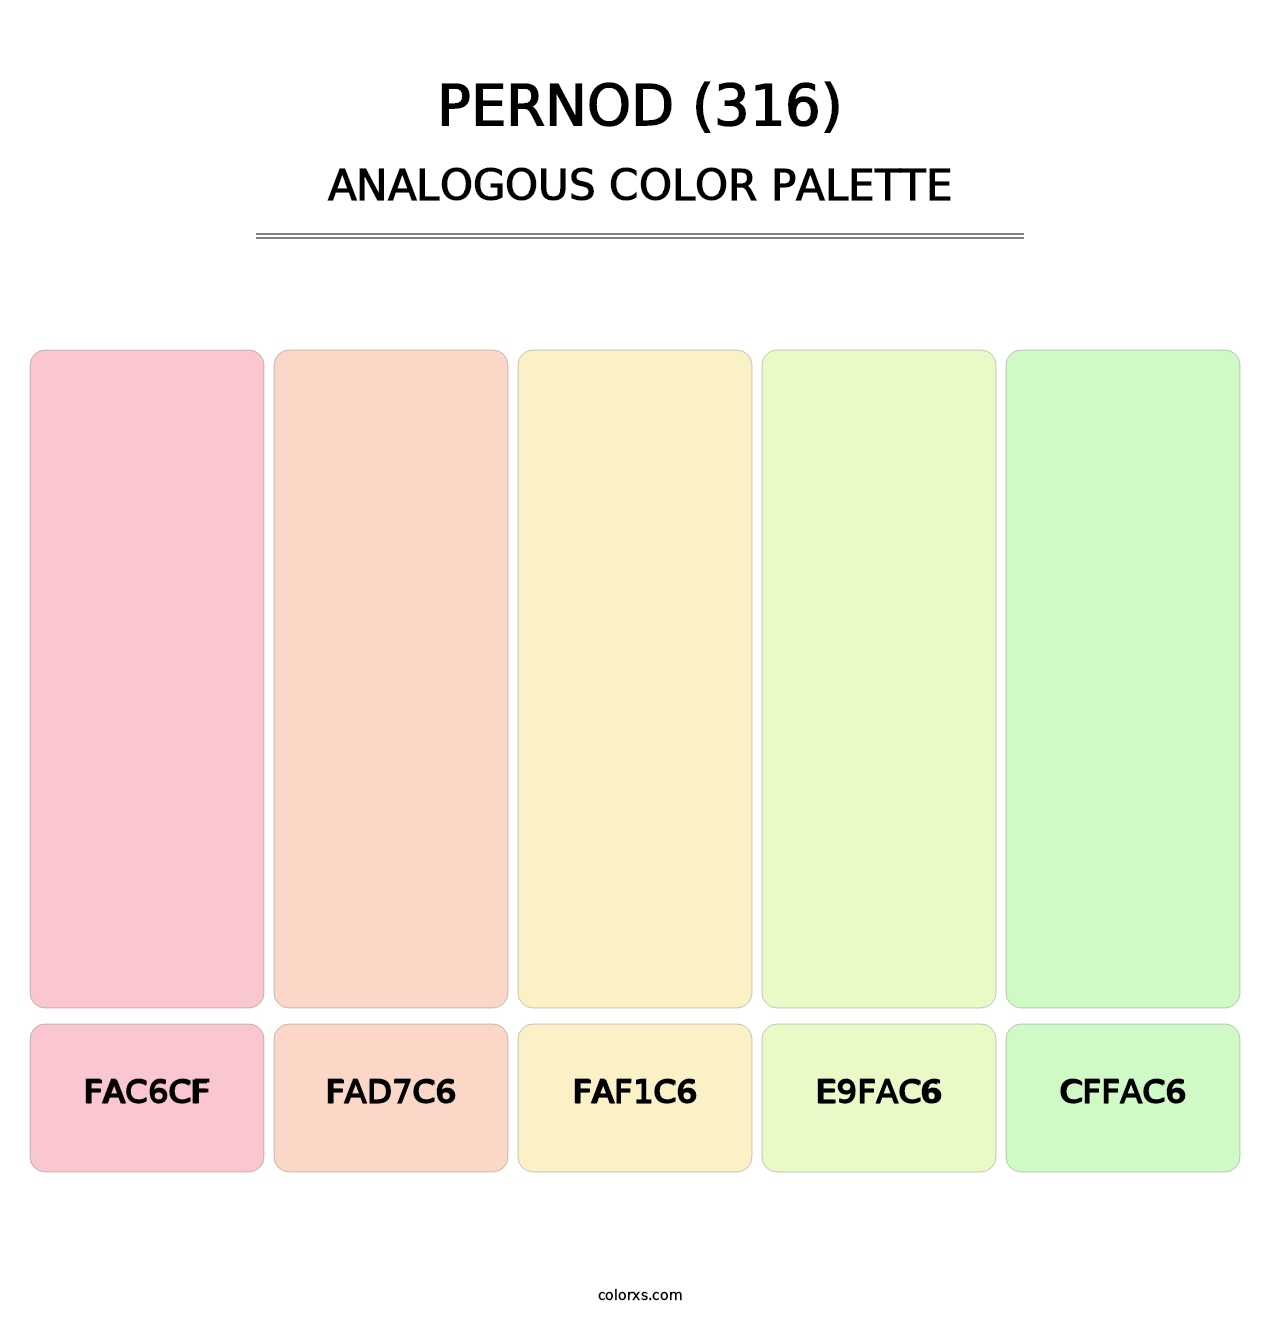 Pernod (316) - Analogous Color Palette